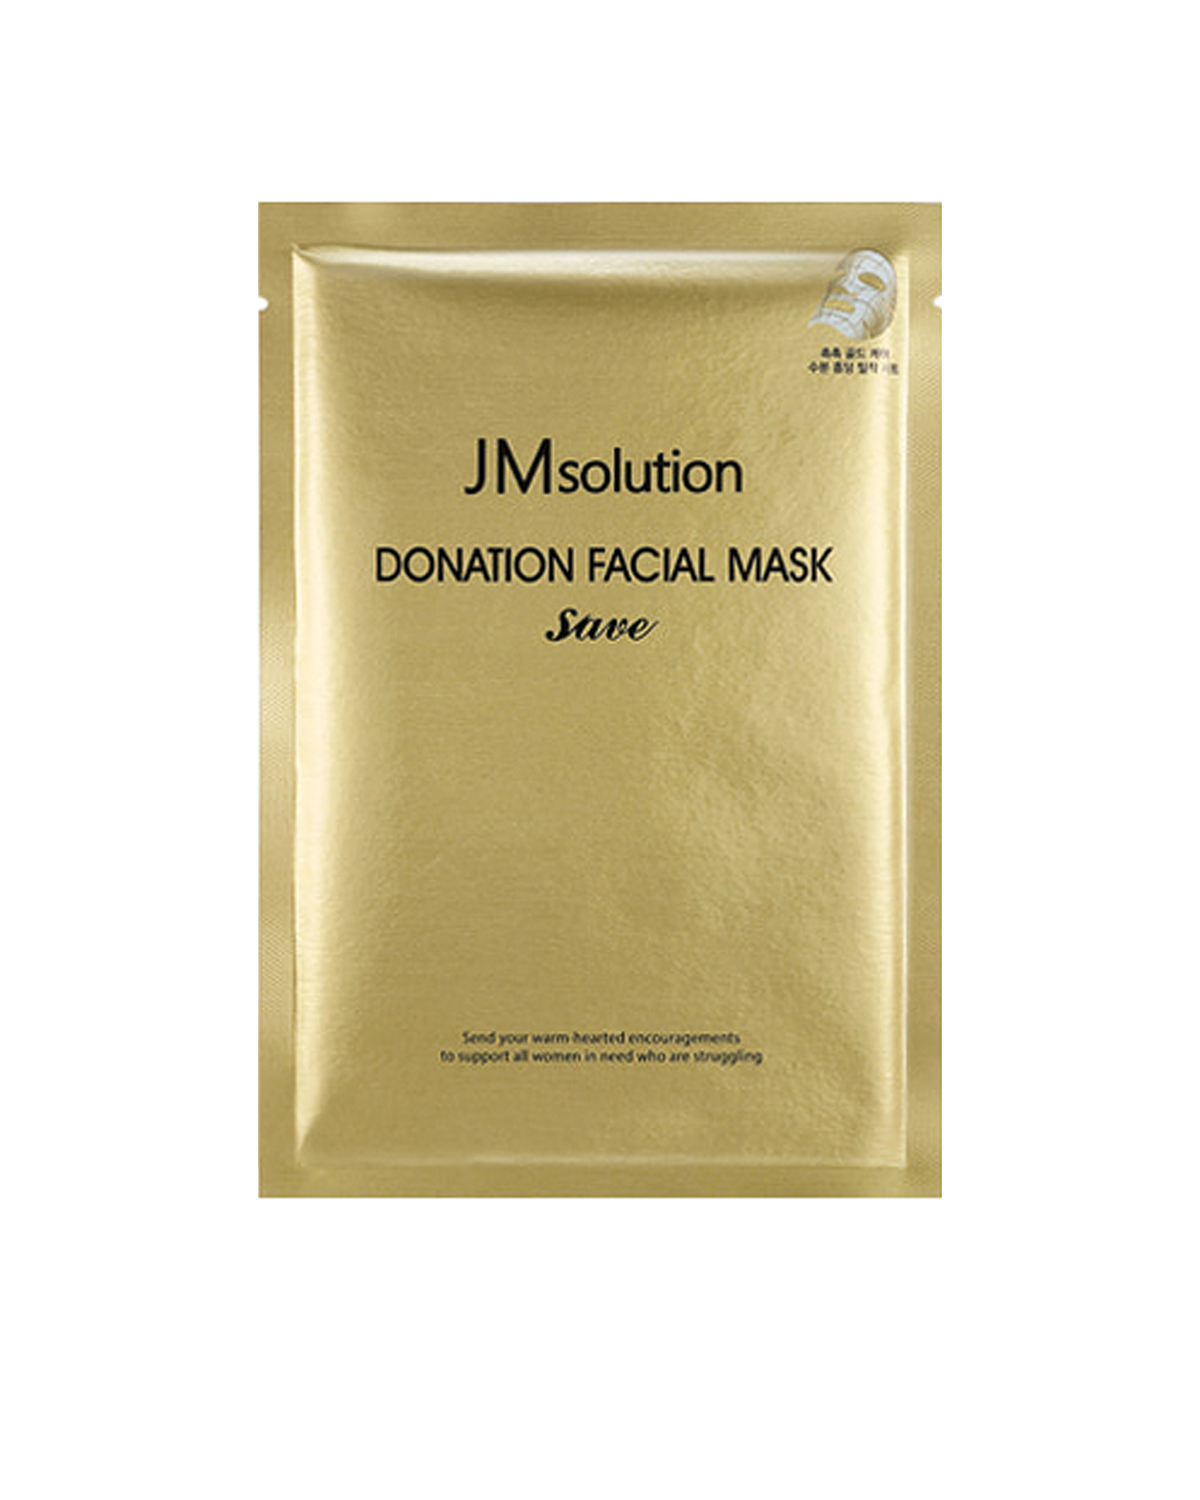 JM SOLUTION Donation Facial Mask Save 37ml